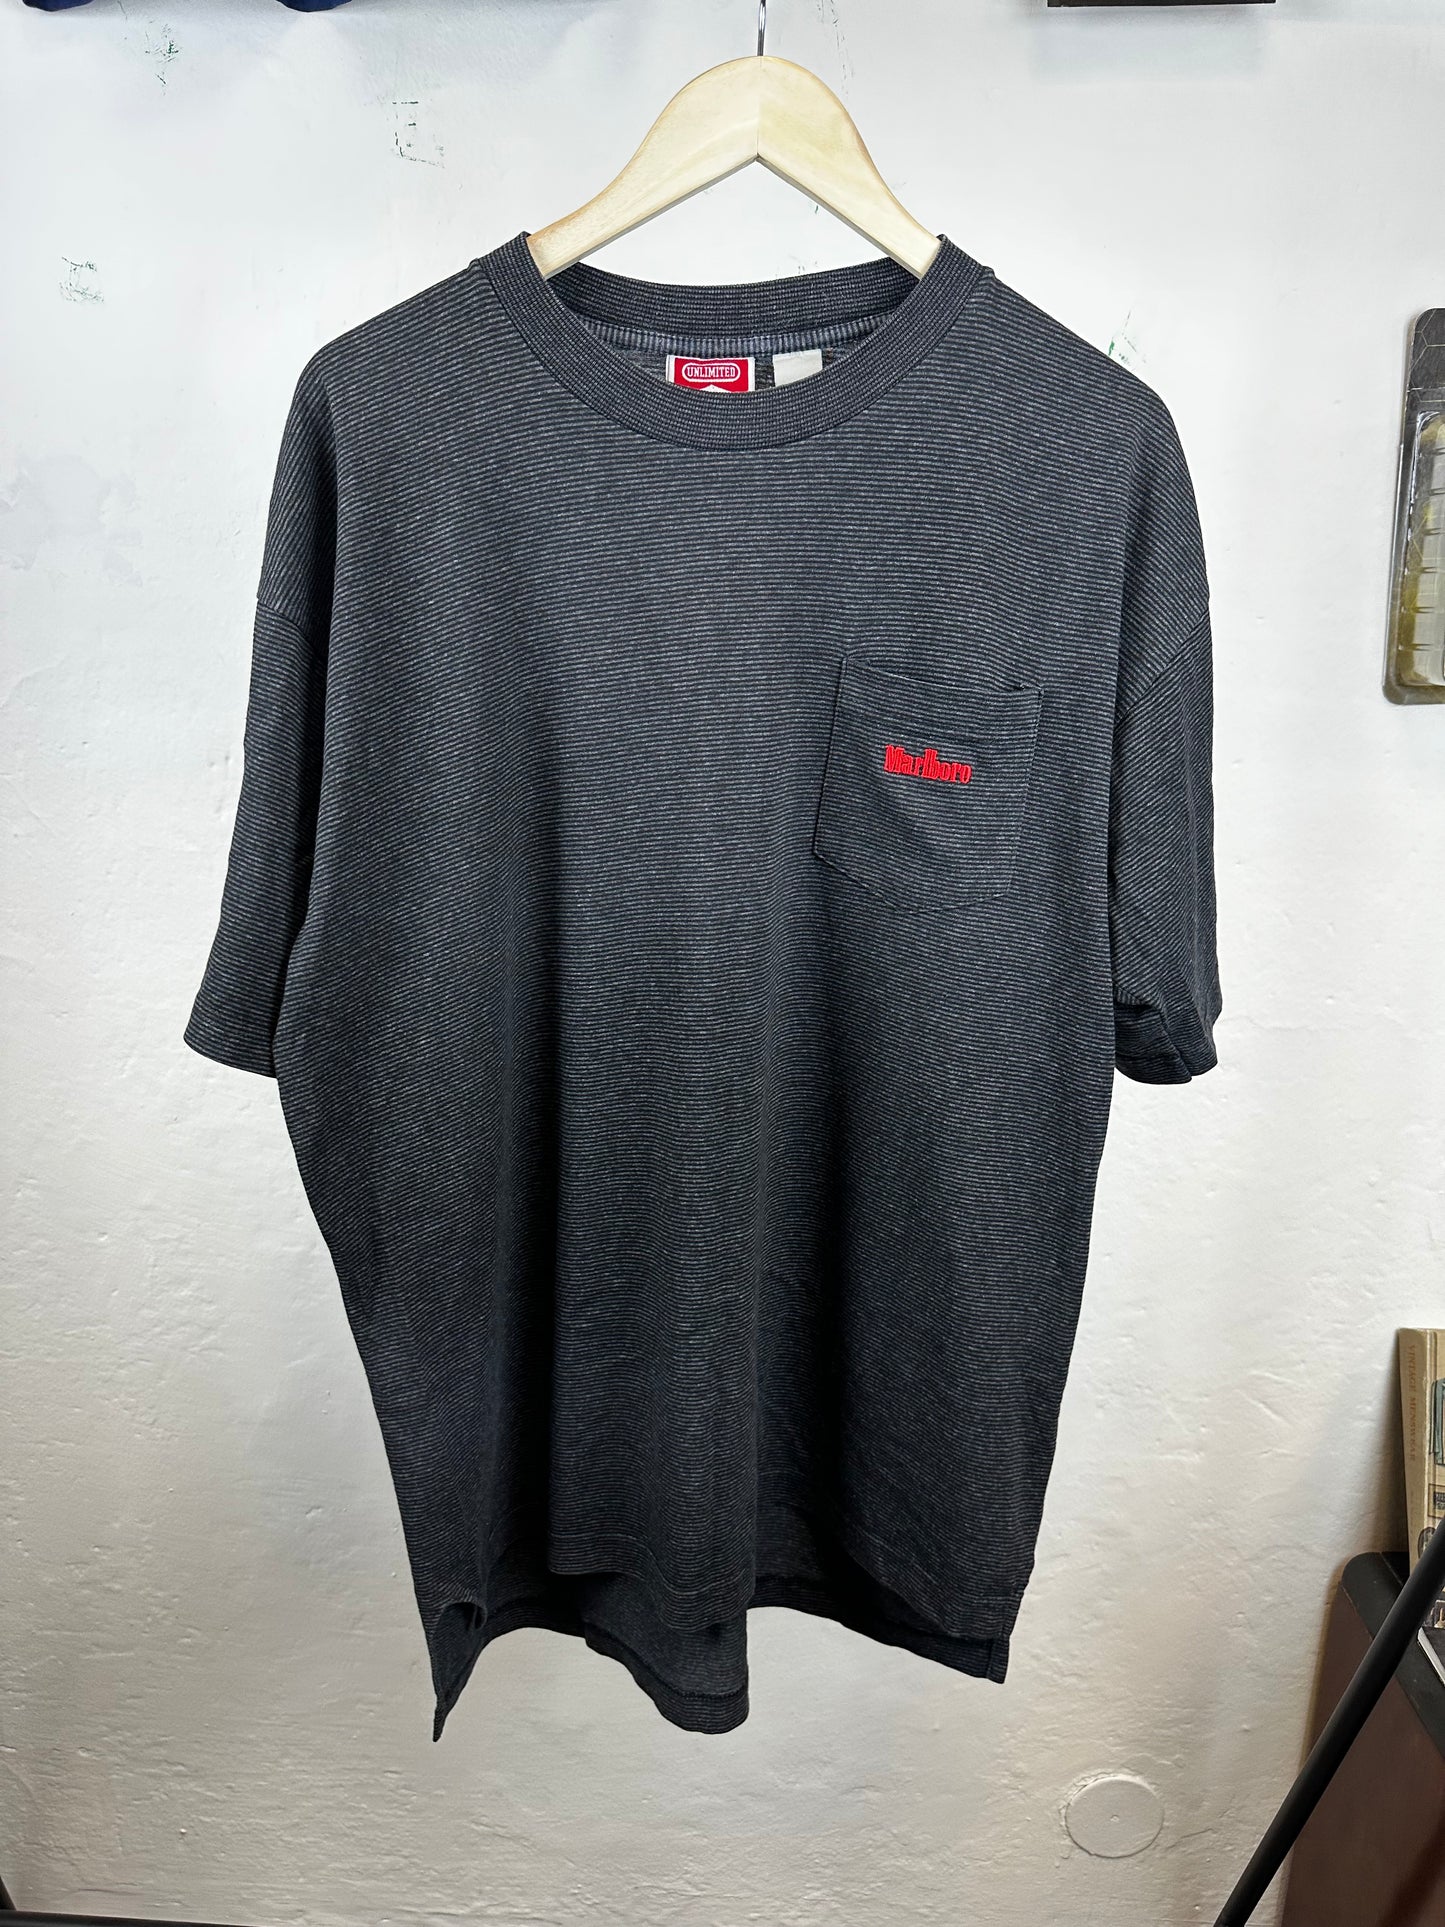 Vintage Marlboro 80s t-shirt - size XL